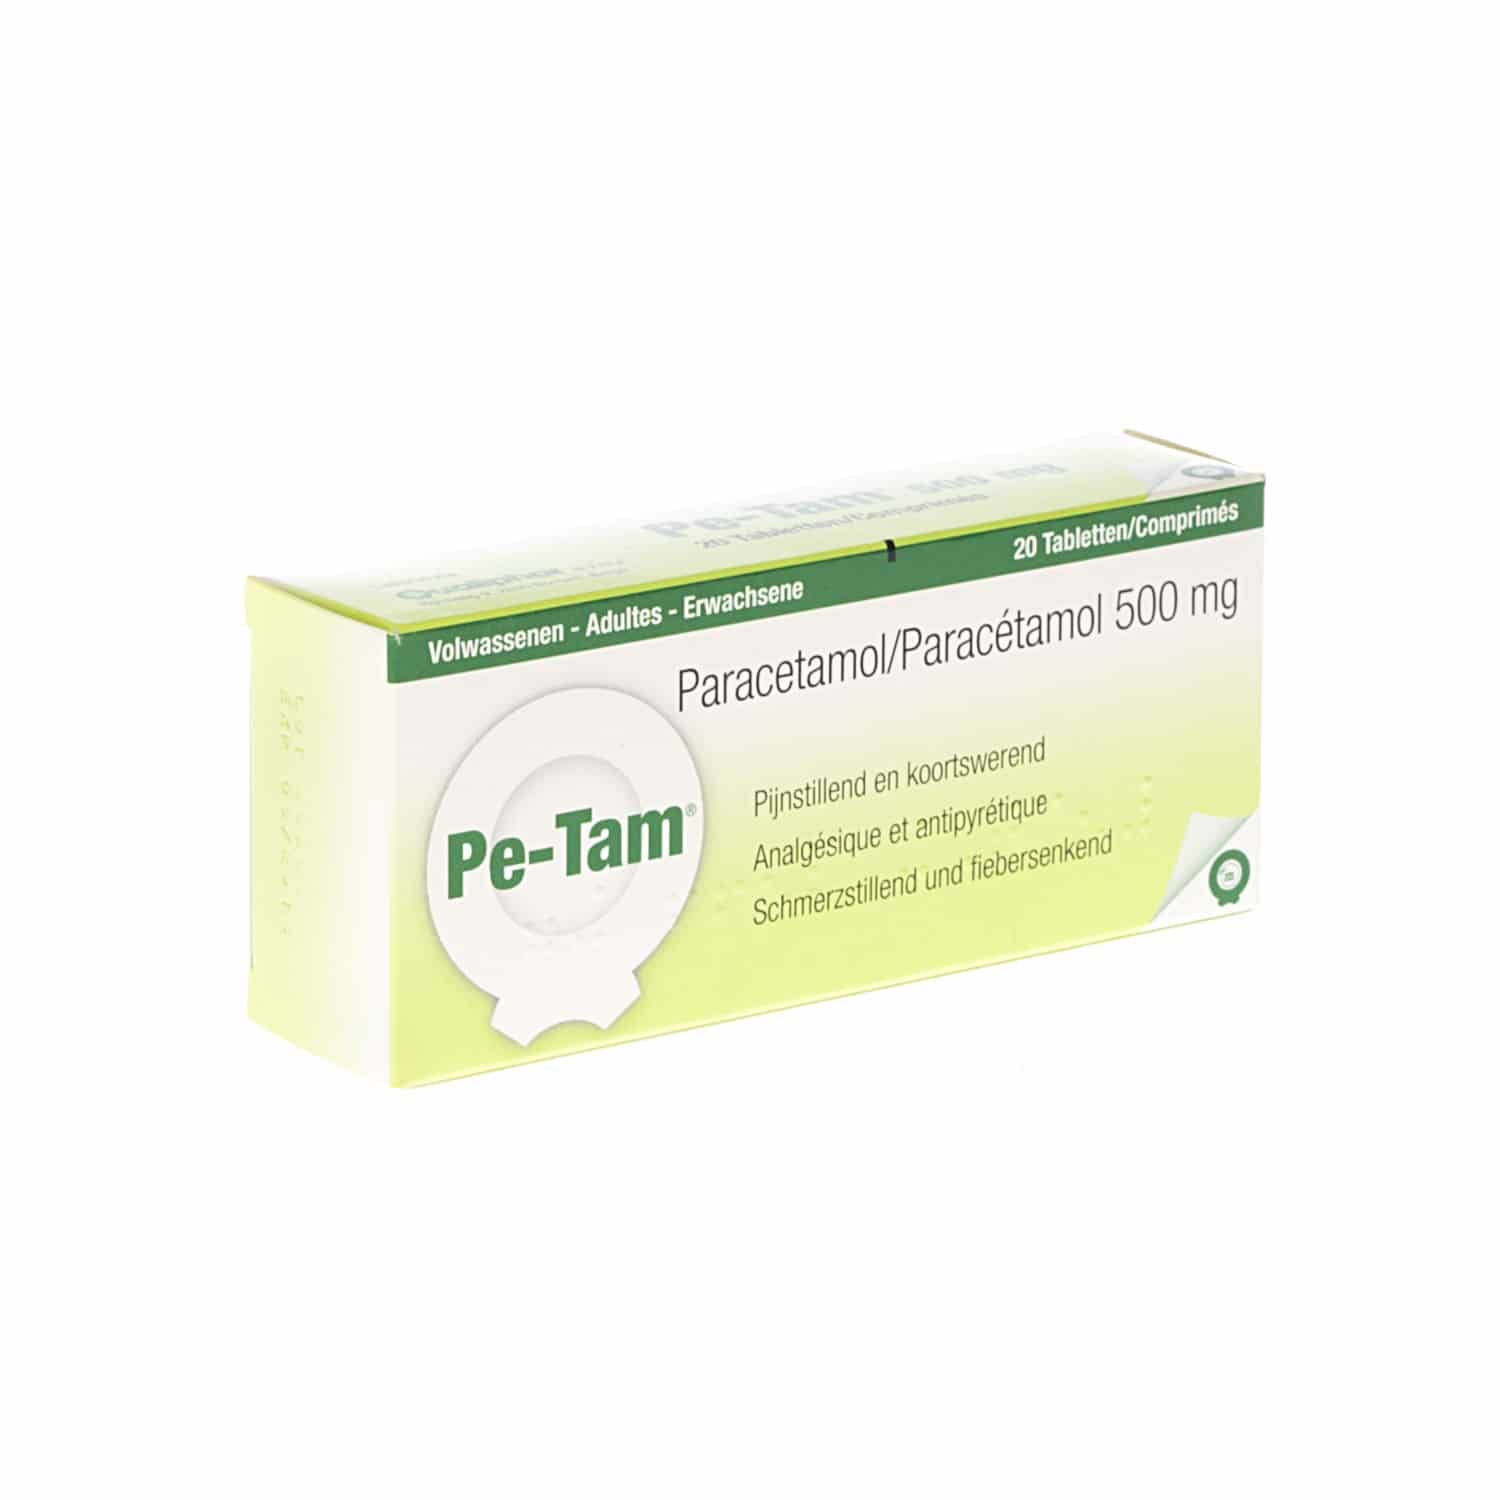 Qualiphar Pe-Tam Paracetamol 500 mg